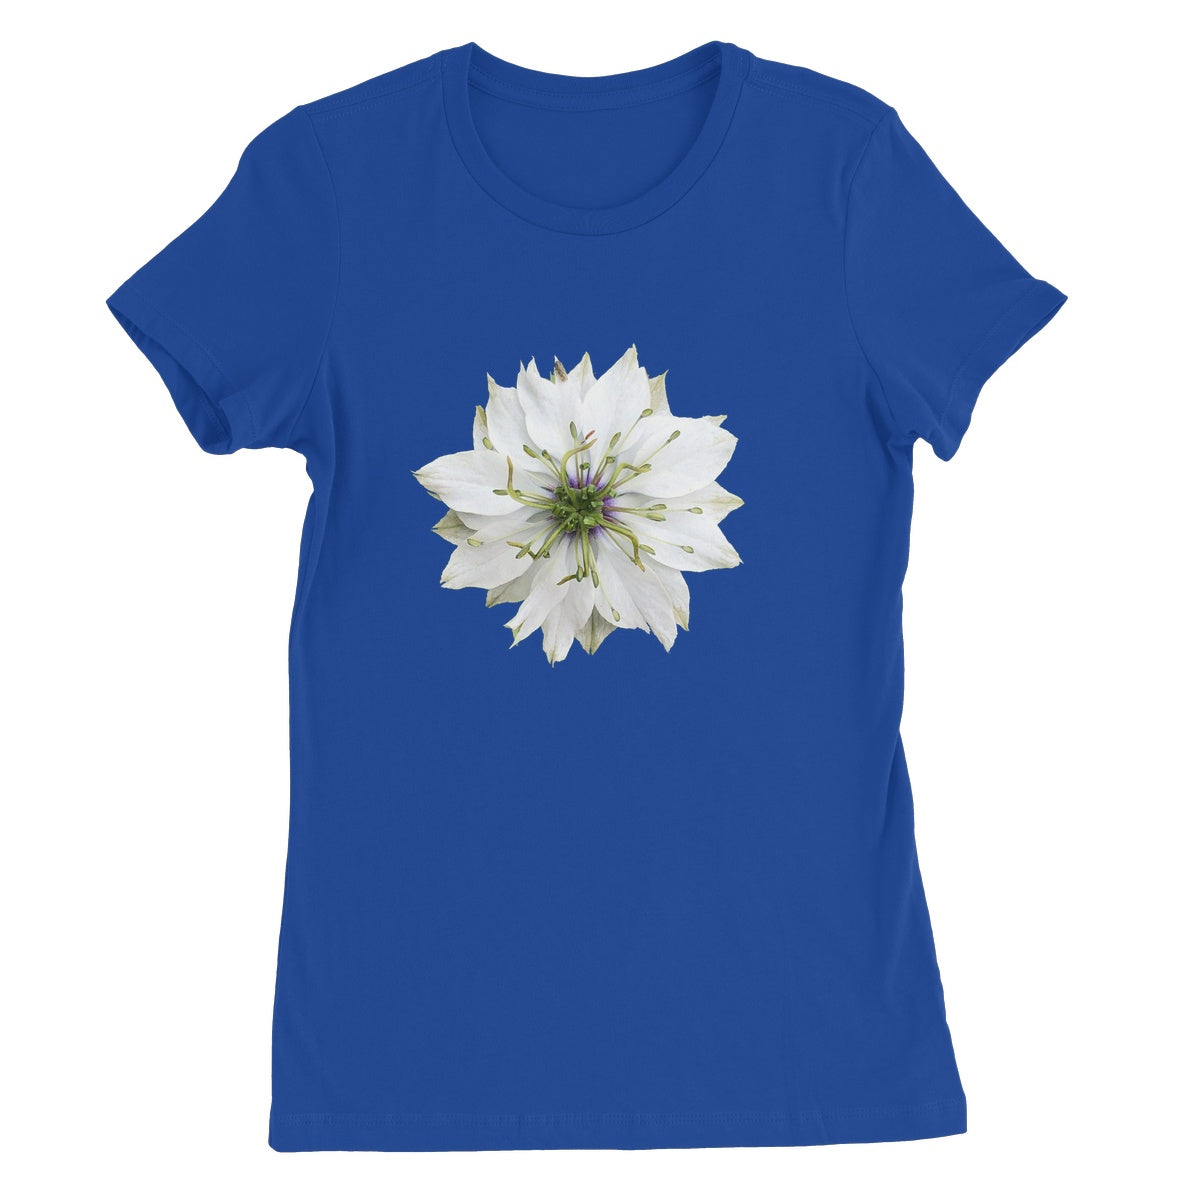 White Flower 'Nigella Love in the Mist' Women's Favourite T-Shirt - Nature of Flowers